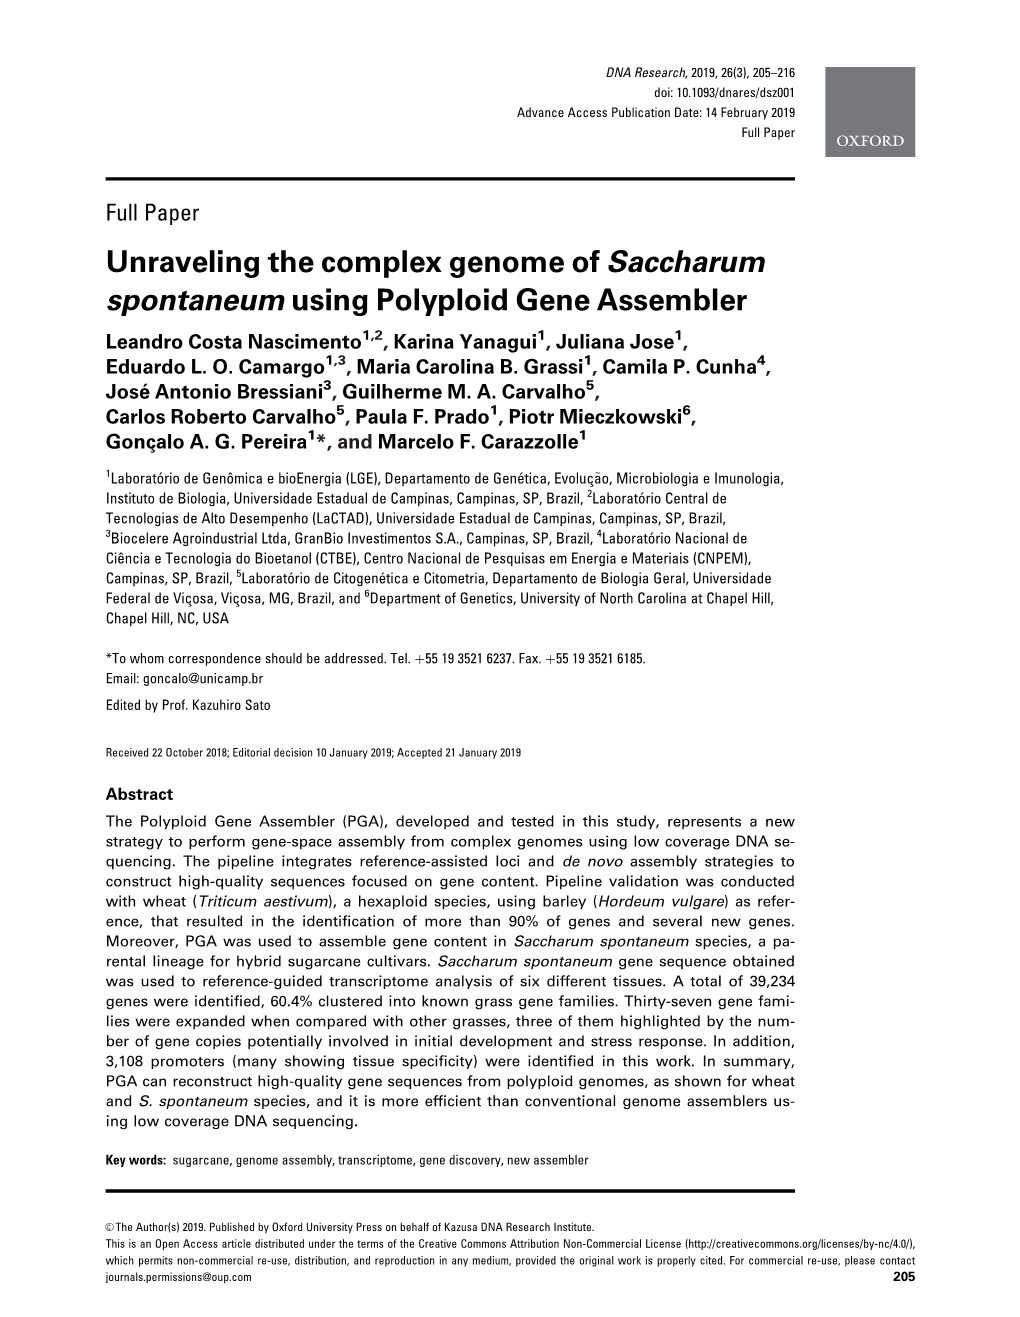 Unraveling the Complex Genome of Saccharum Spontaneum Using Polyploid Gene Assembler Leandro Costa Nascimento1,2, Karina Yanagui1, Juliana Jose1, Eduardo L